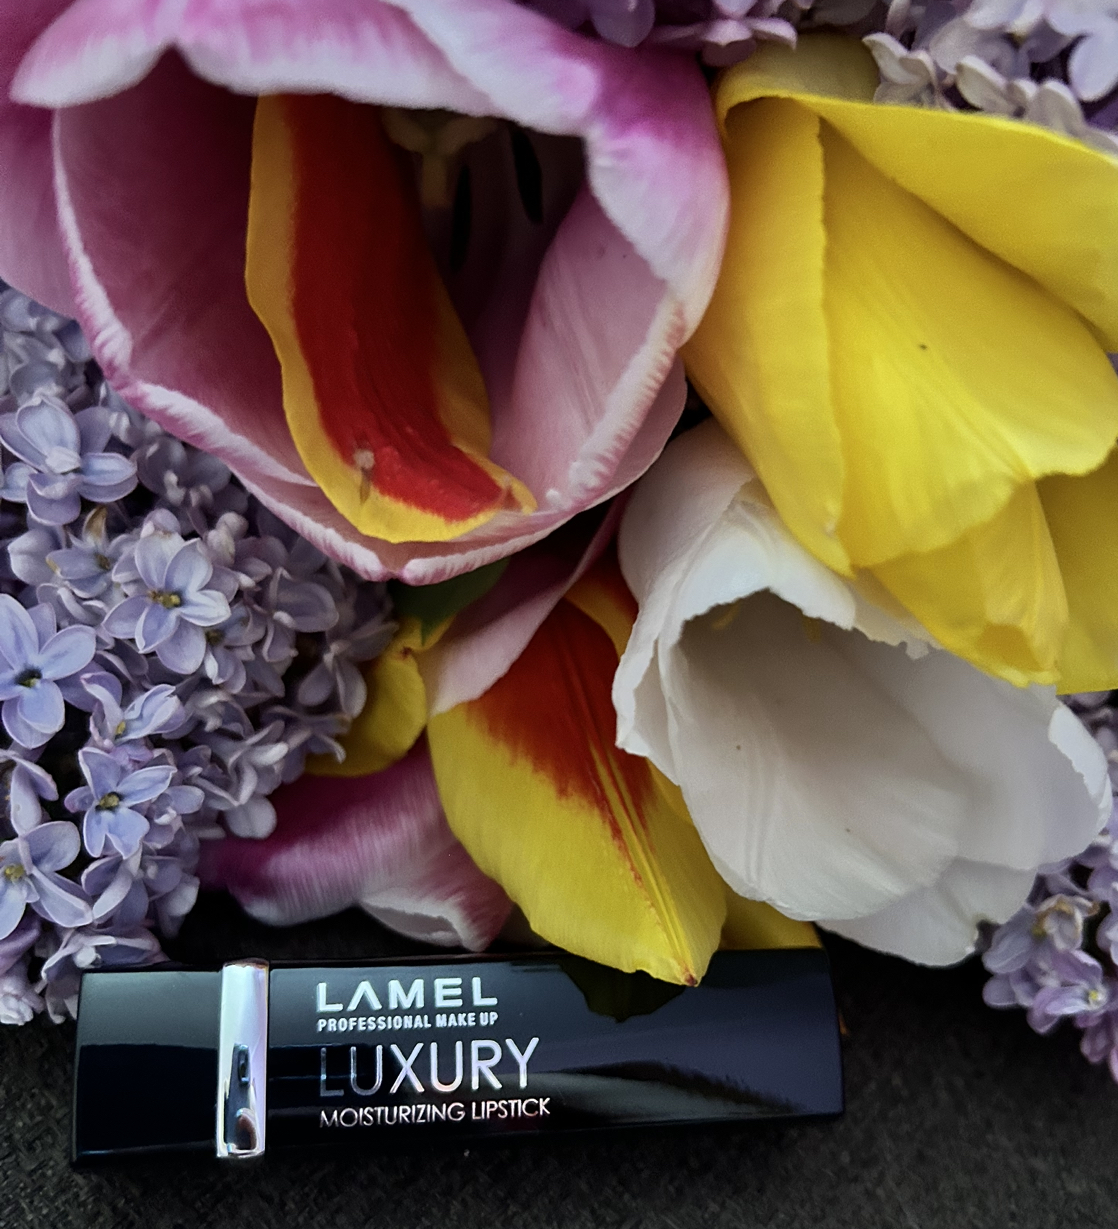 Lamel Professional Luxury Moisturizing Lipstick